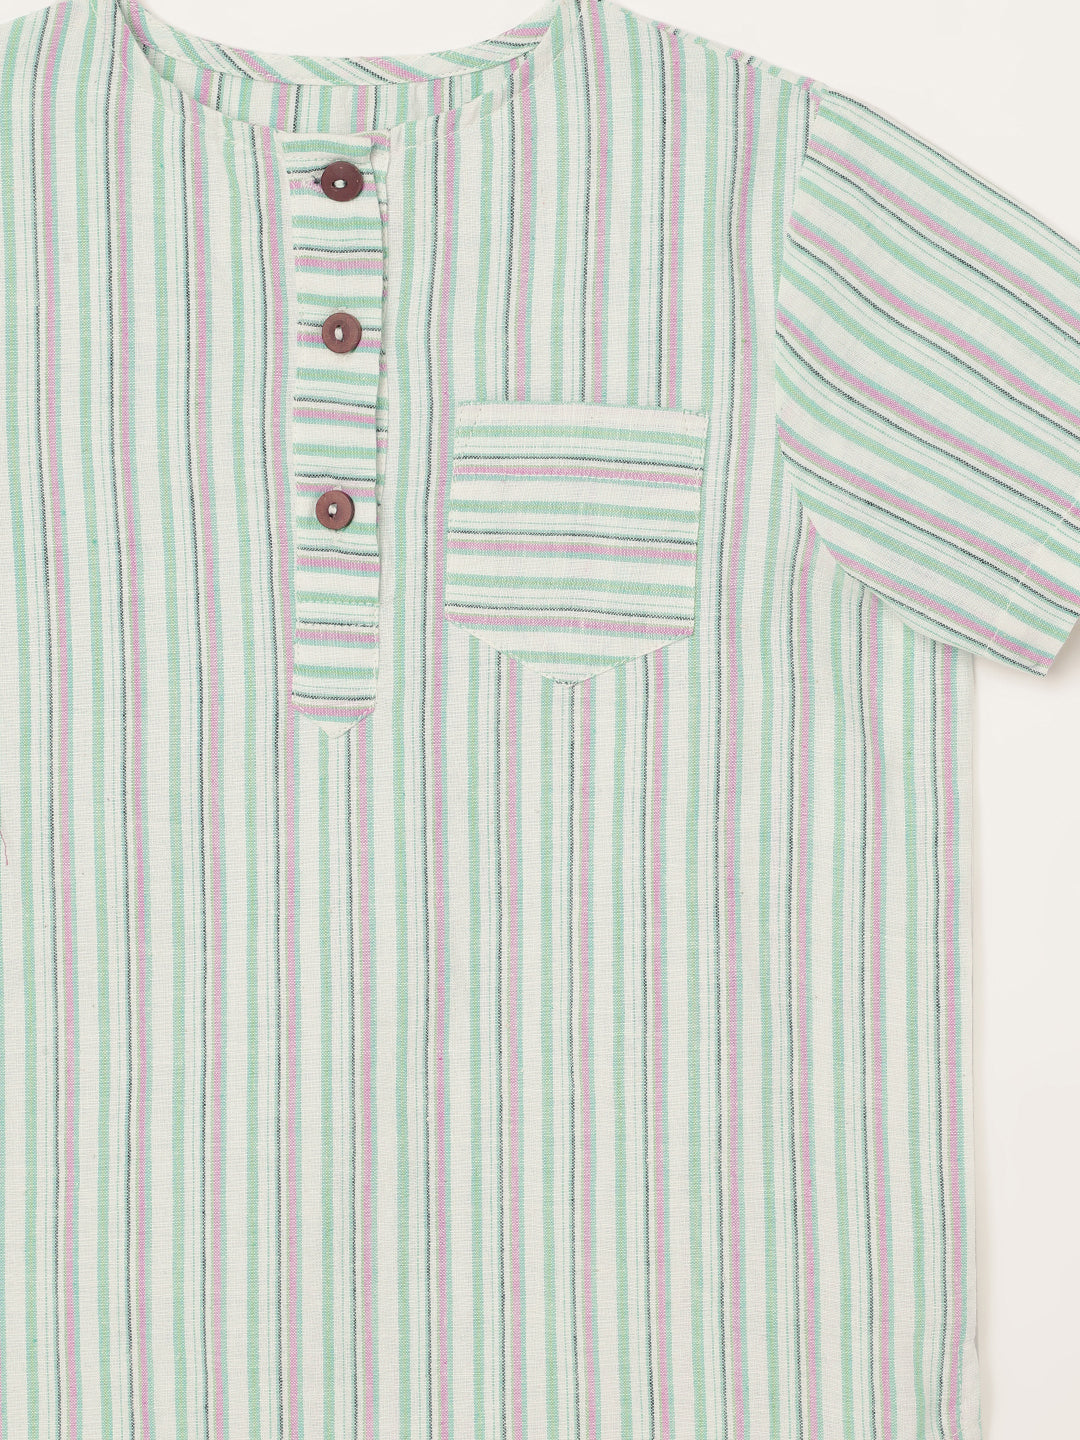 Boys Handloom Cotton Green Stripes Half Sleeves Shirt 1 yr to 8 yrs - Close-up